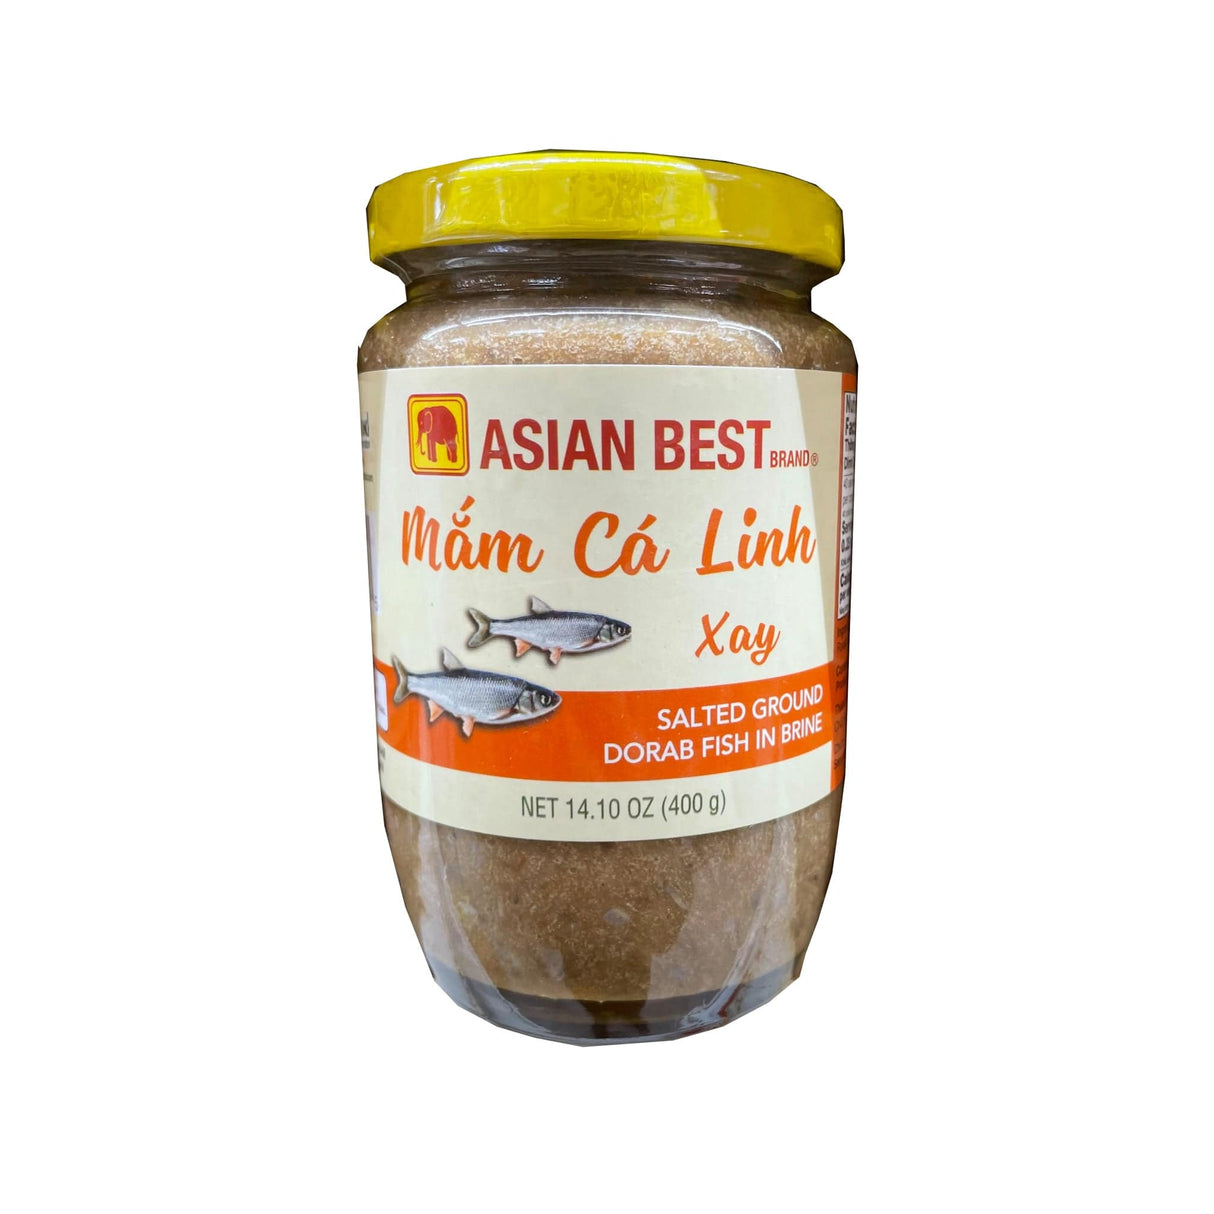 Asian Best Brand Salted Ground Dorab Fish in Brine (Mam Ca Linh Xag)